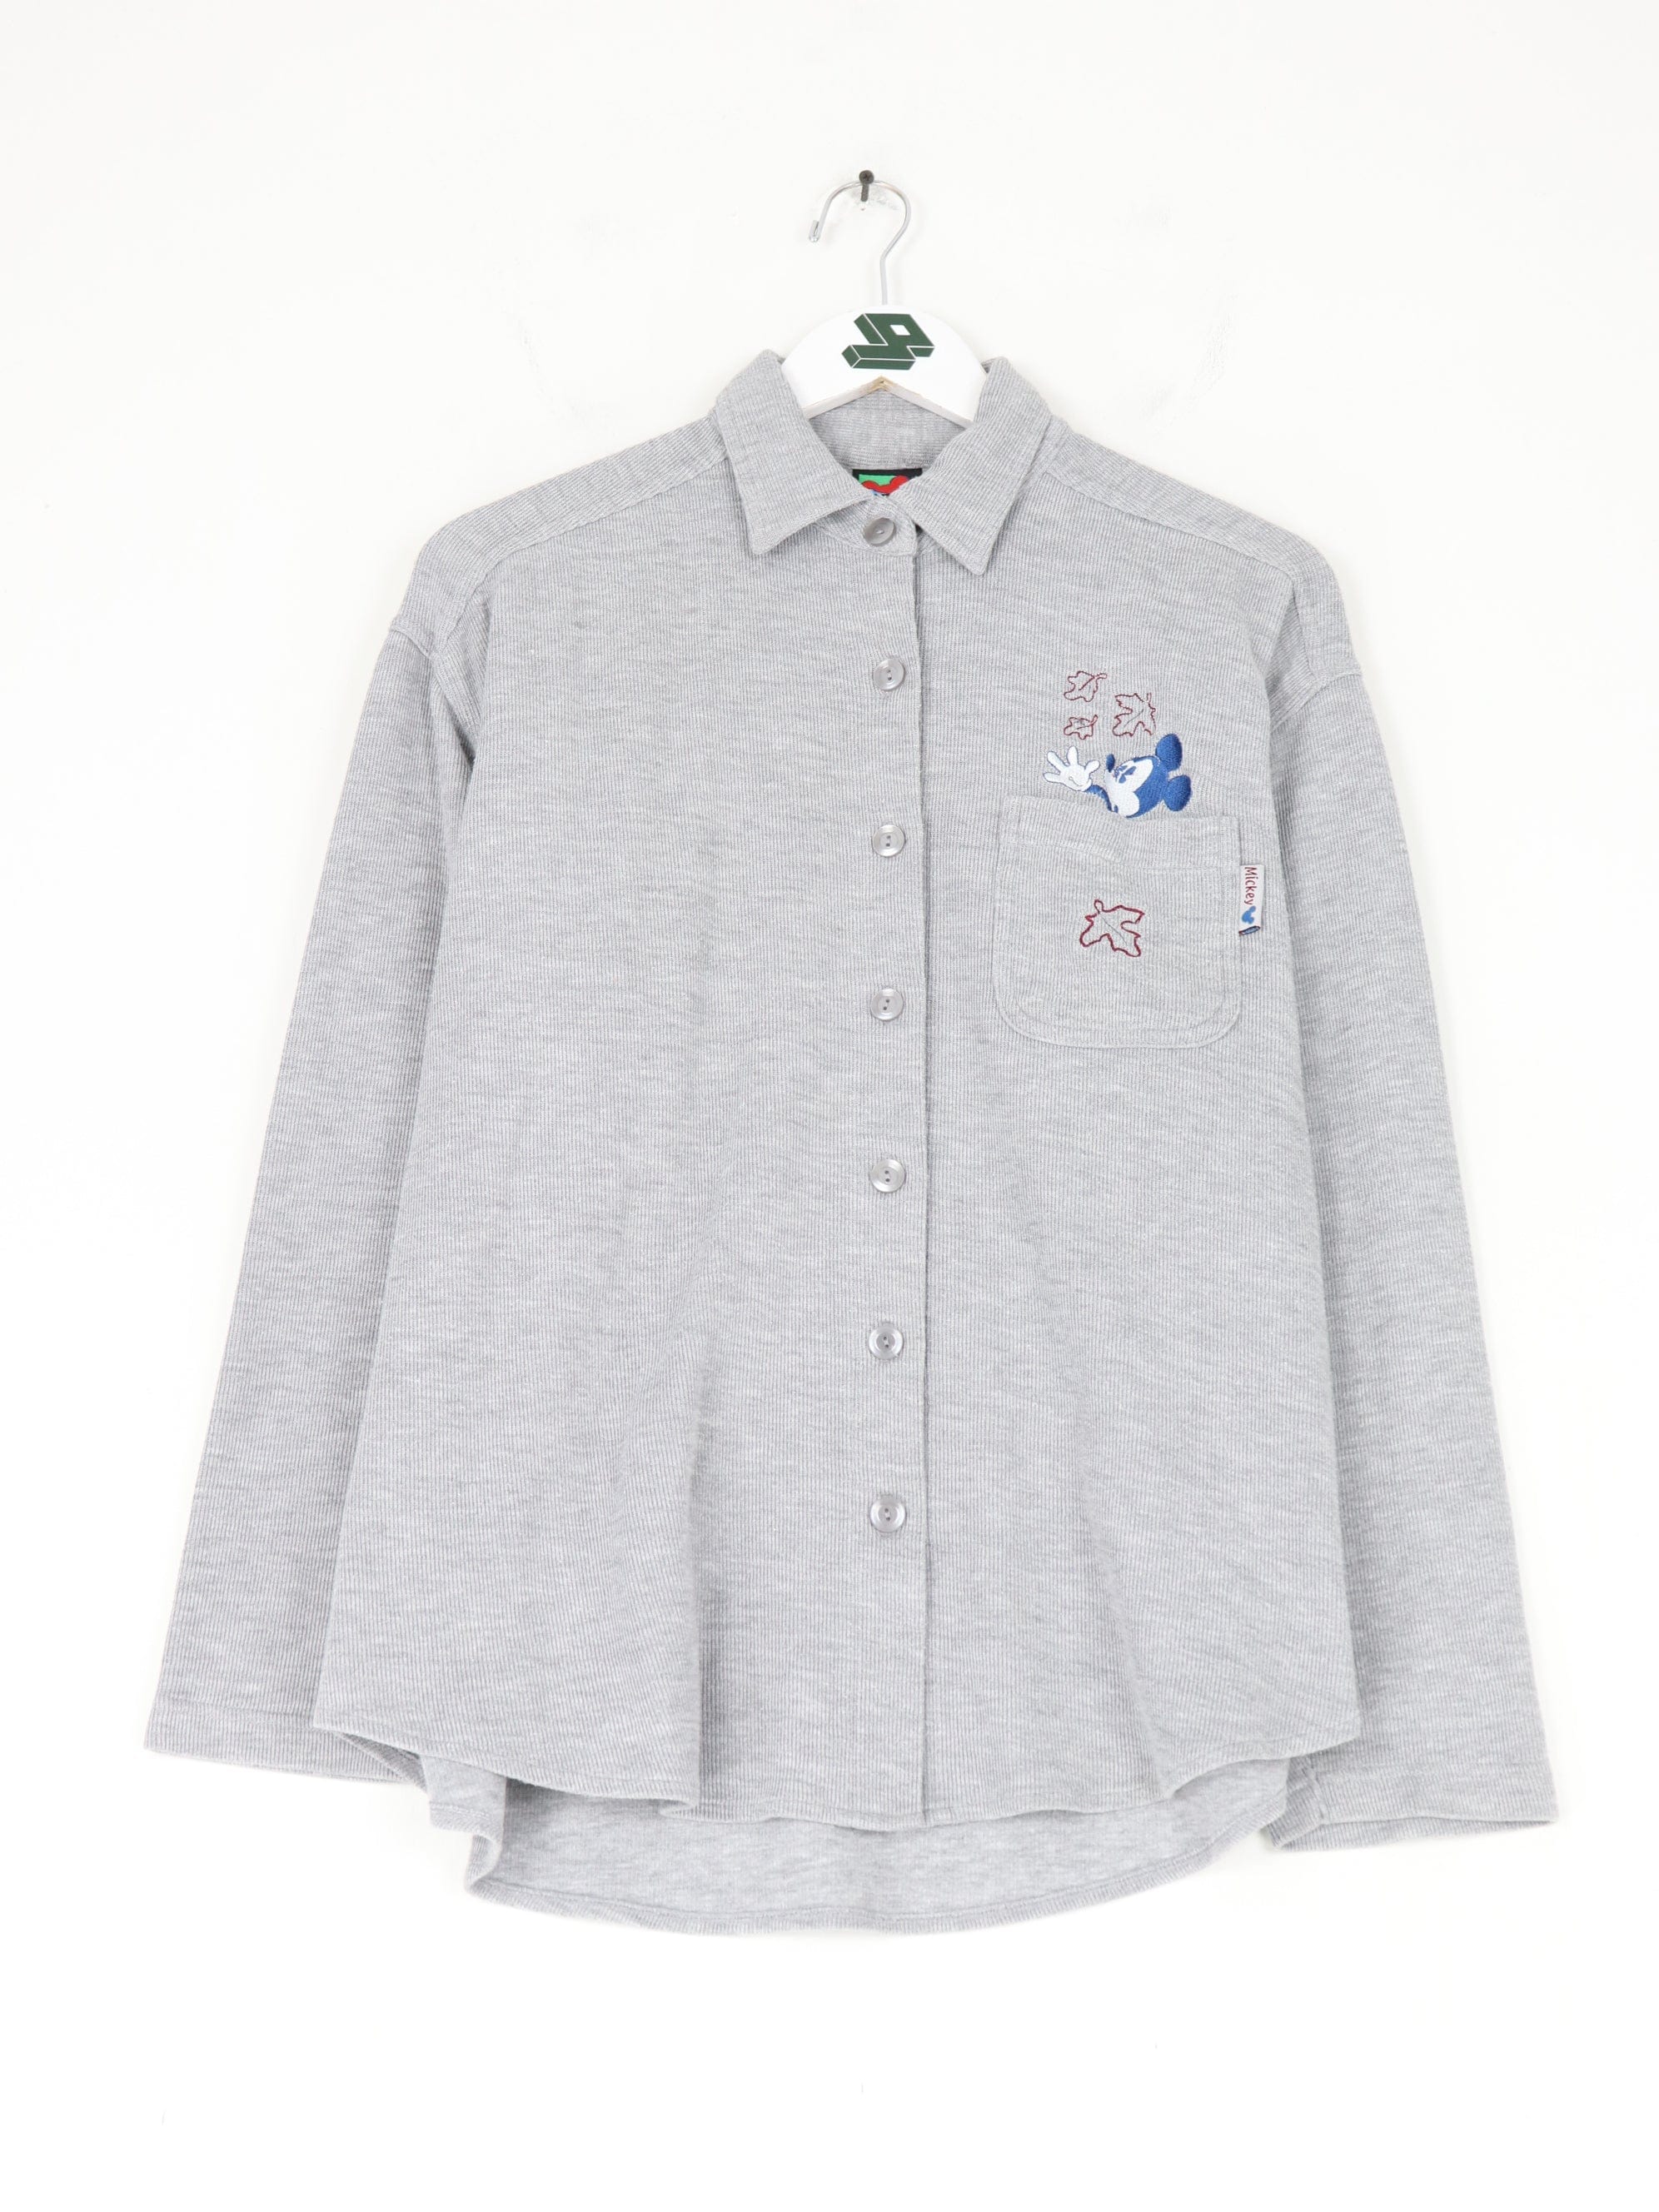 Vintage Disney Shirt Womens Medium Grey Button Sweater Mickey Mouse